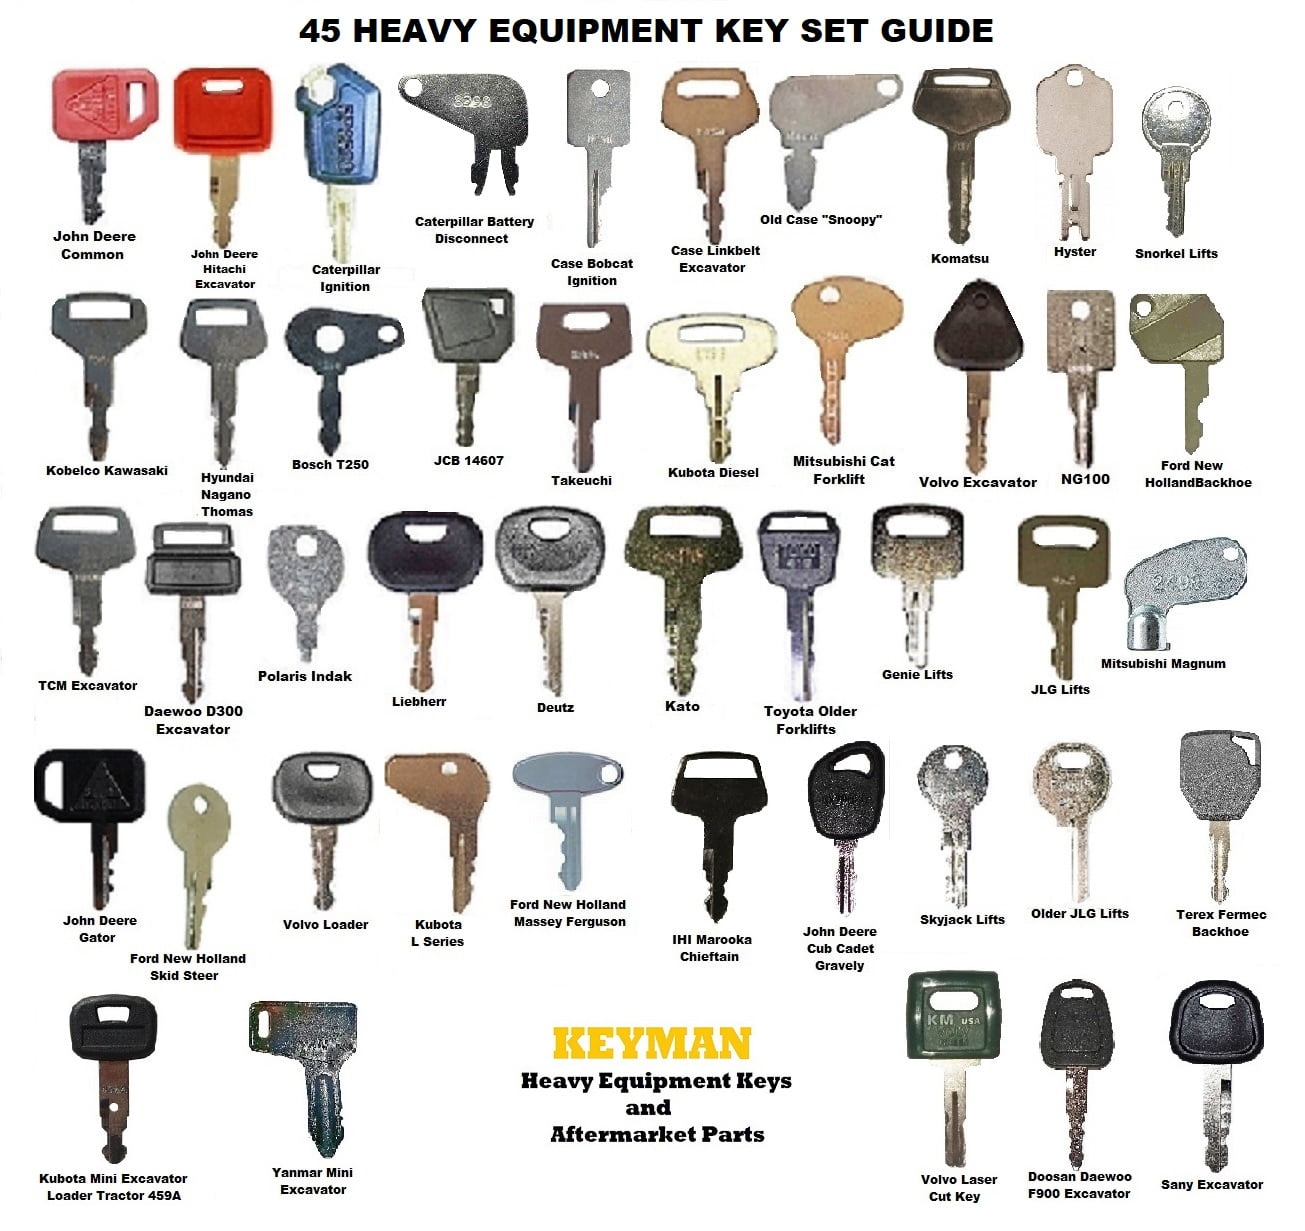 CATIPILLAR Keys Heavy Equipment Dozer Excavator Dozer CAT Key Set 4 